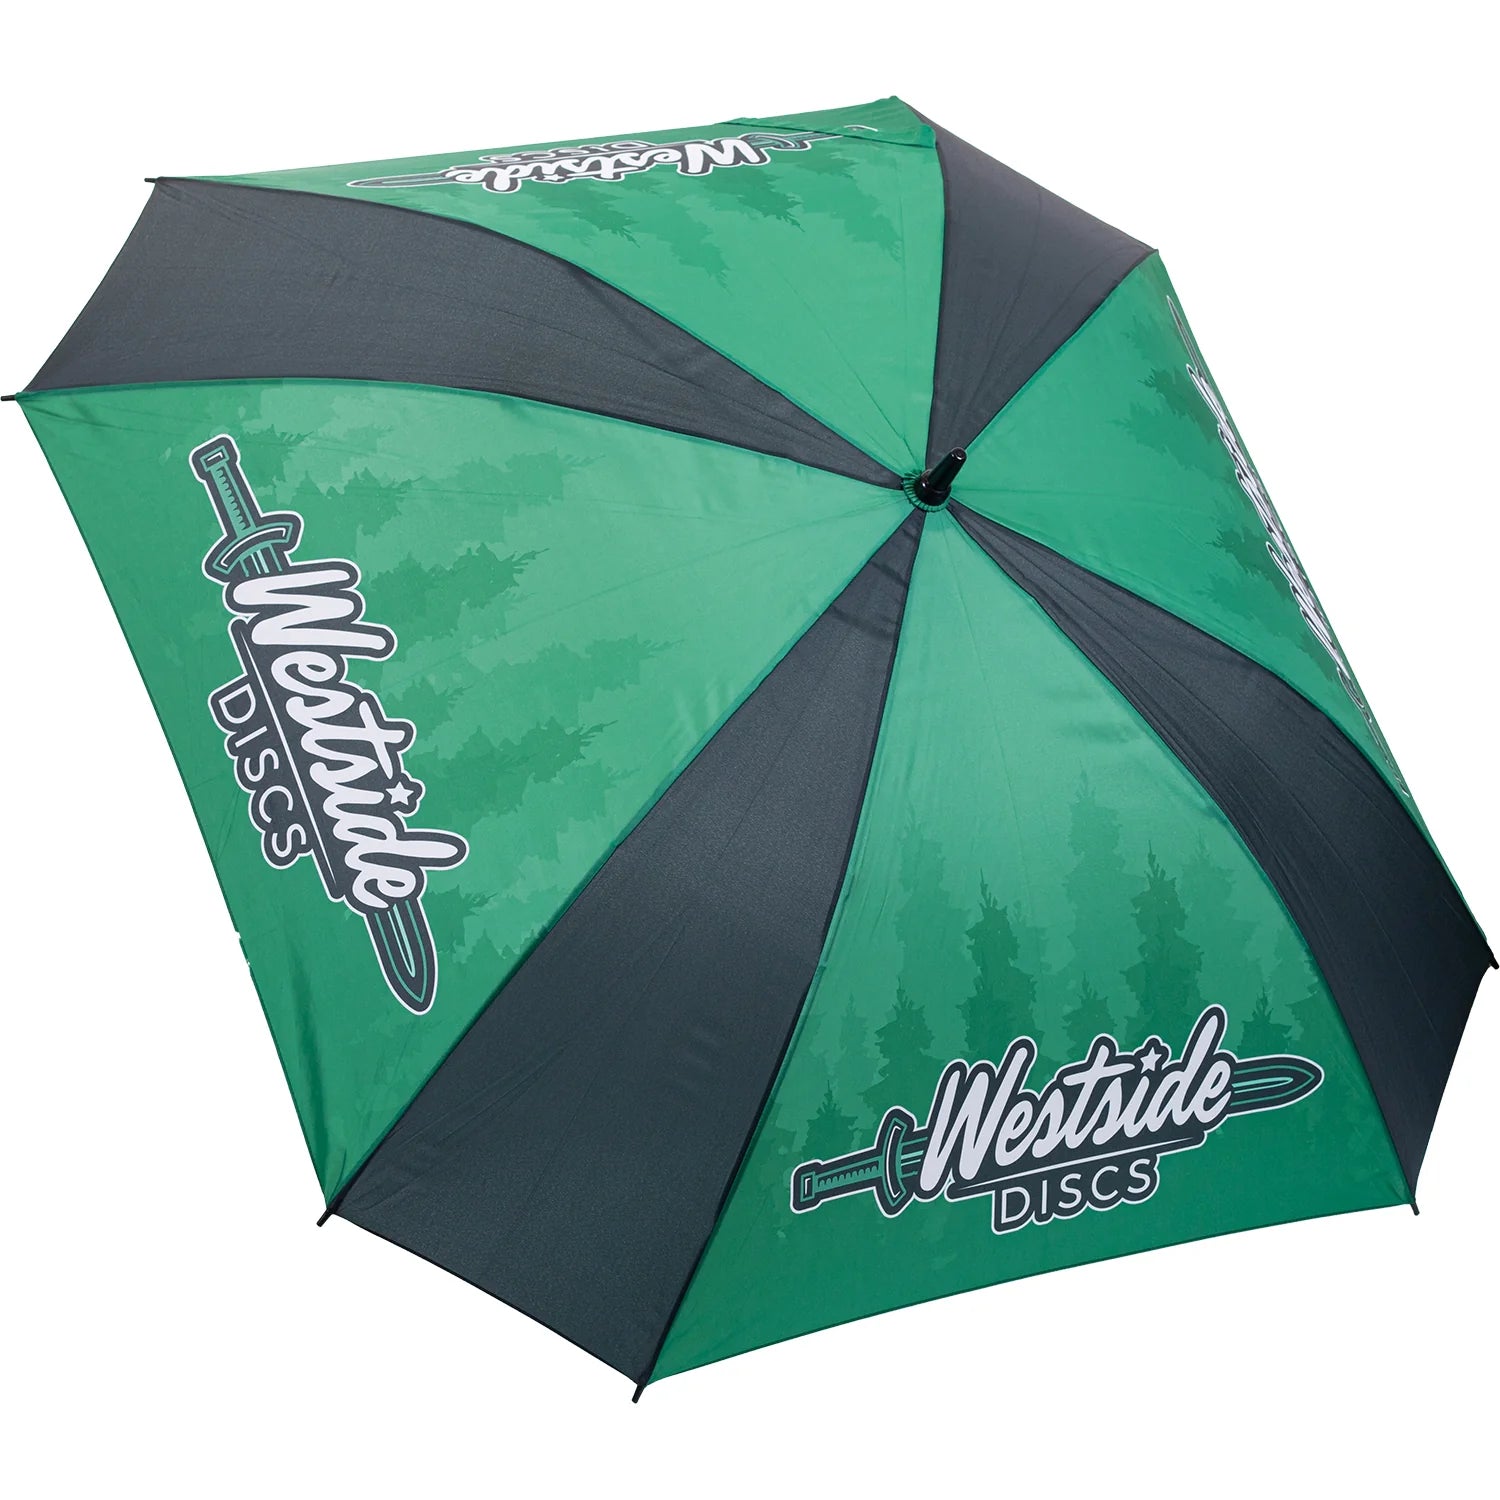 Dynamic Discs/Handeye Supply/Latitude 64/Westside Discs 60" ARC Umbrellas